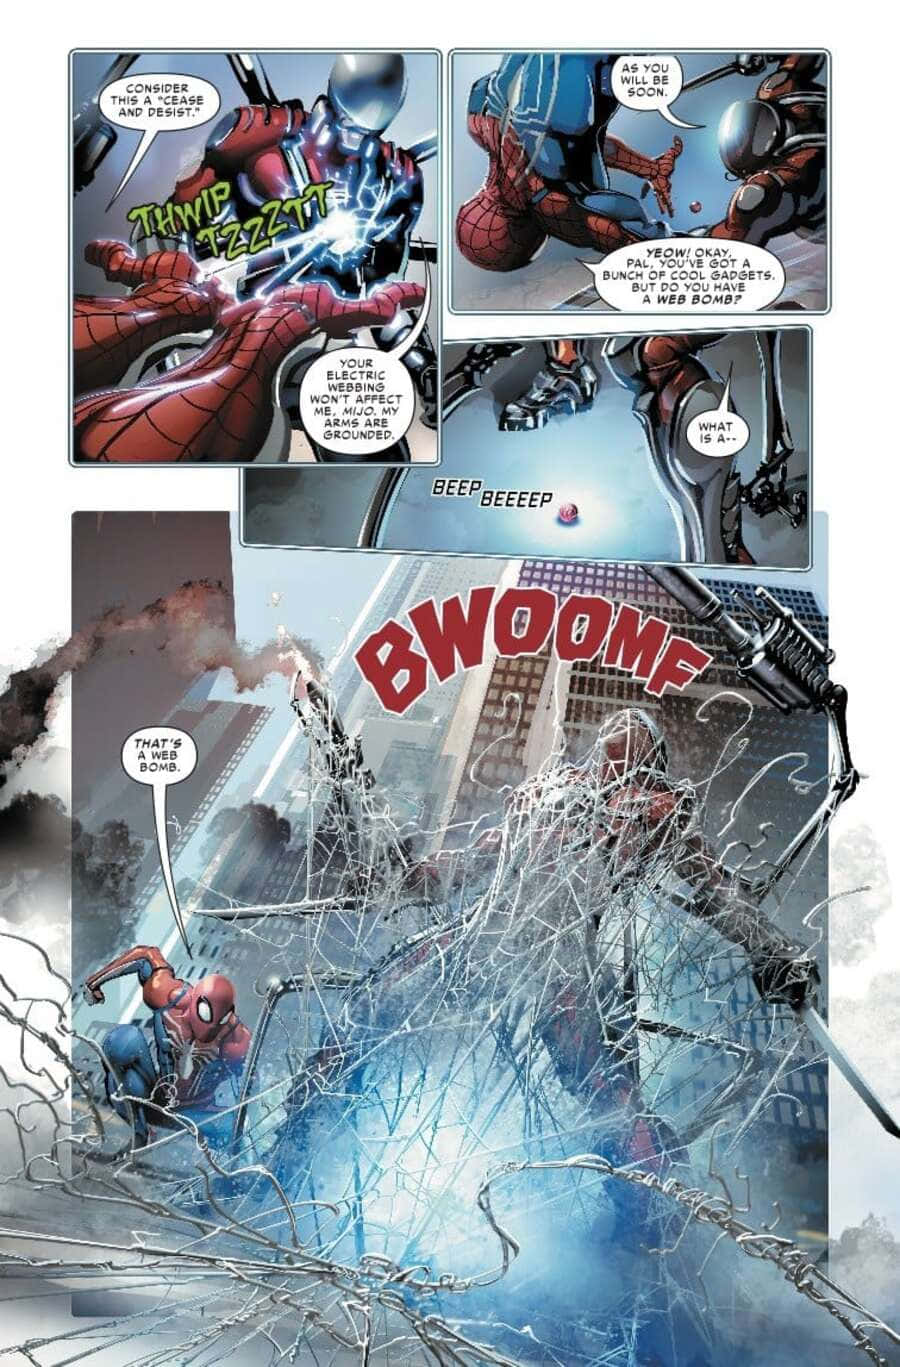 Spider-Geddon: A Battle of Epic Proportions Wallpaper